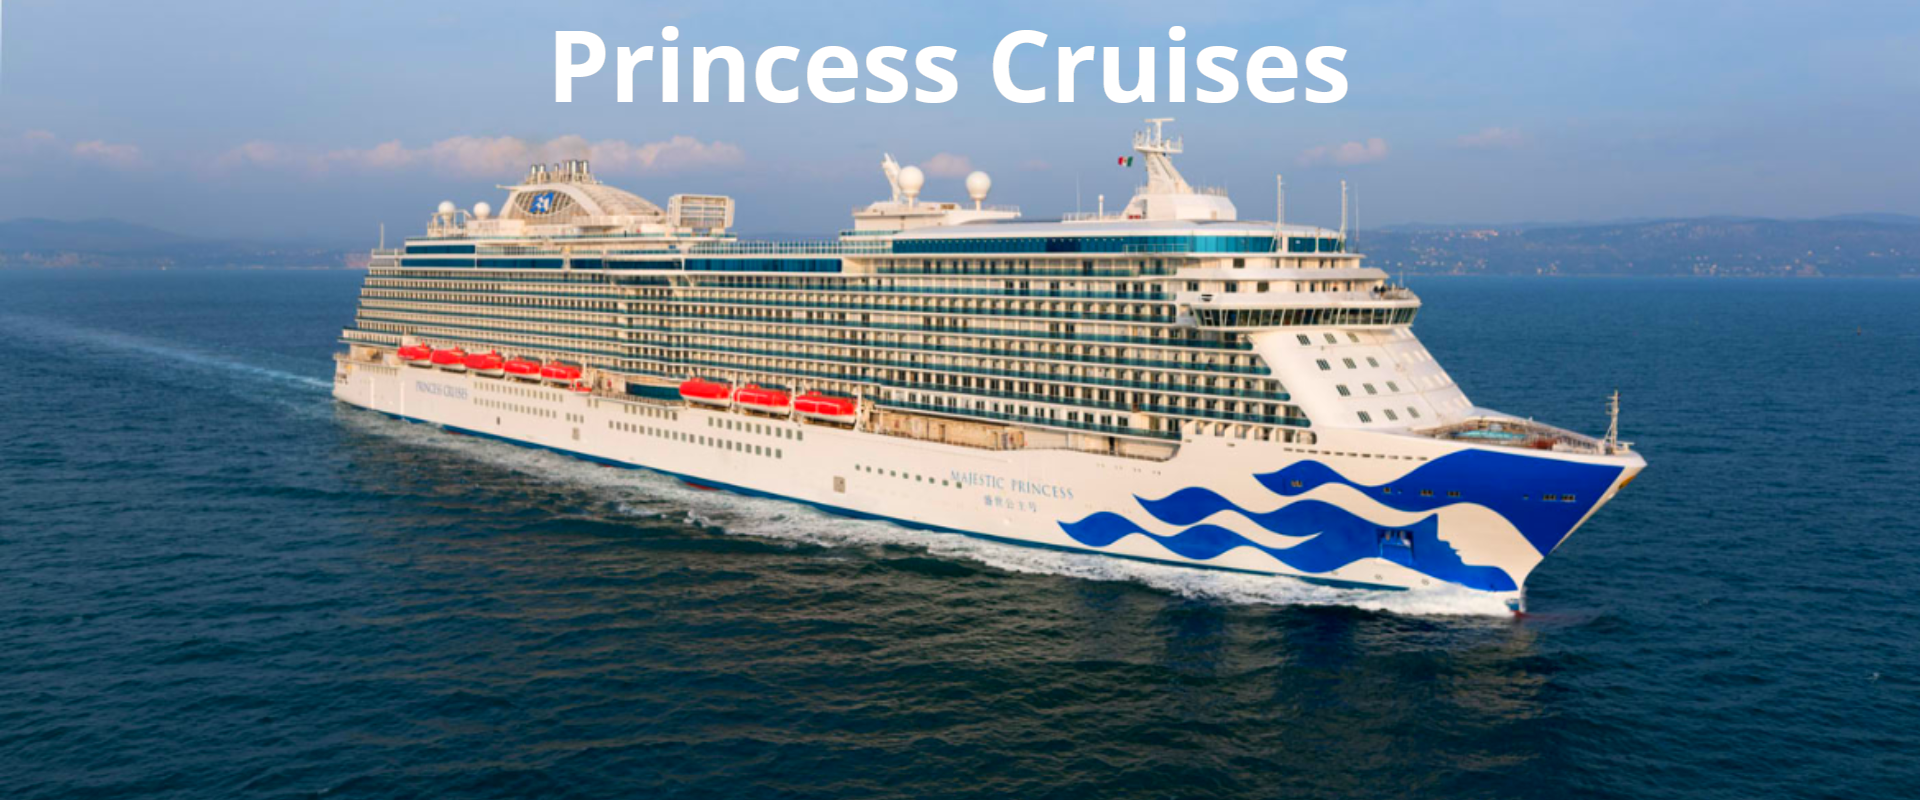 Princess Cruises Just Cruises